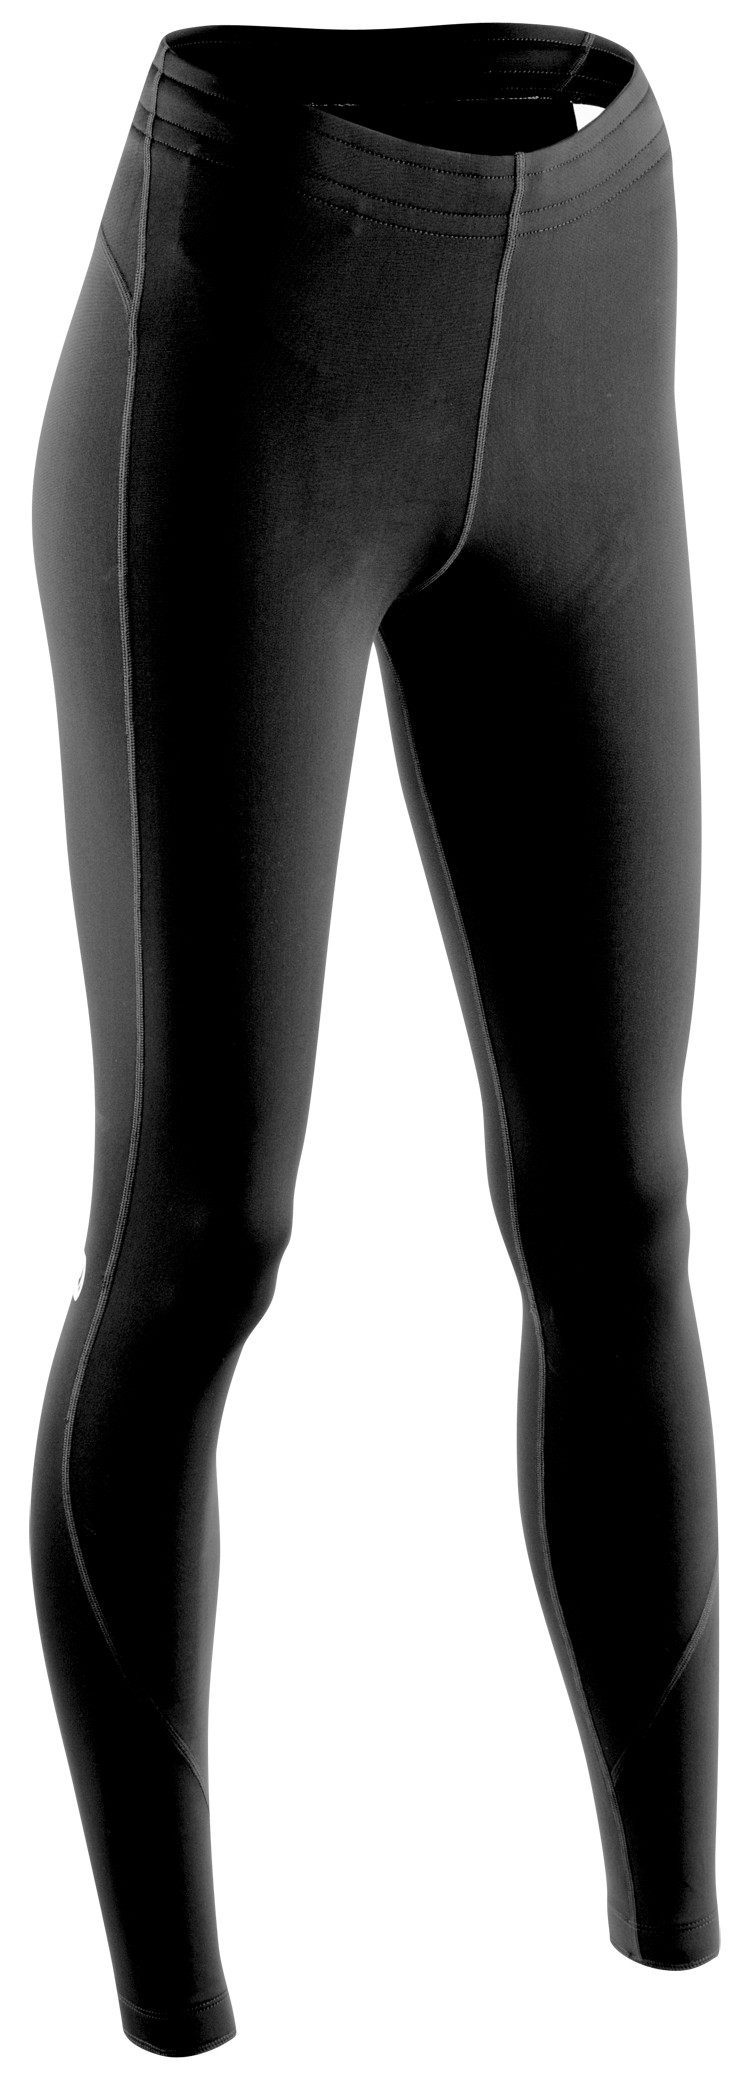 Рейтузы Sugoi Linear MIDZERO TIGHT, женские, gunmetal/black (серо-черные), M фото 